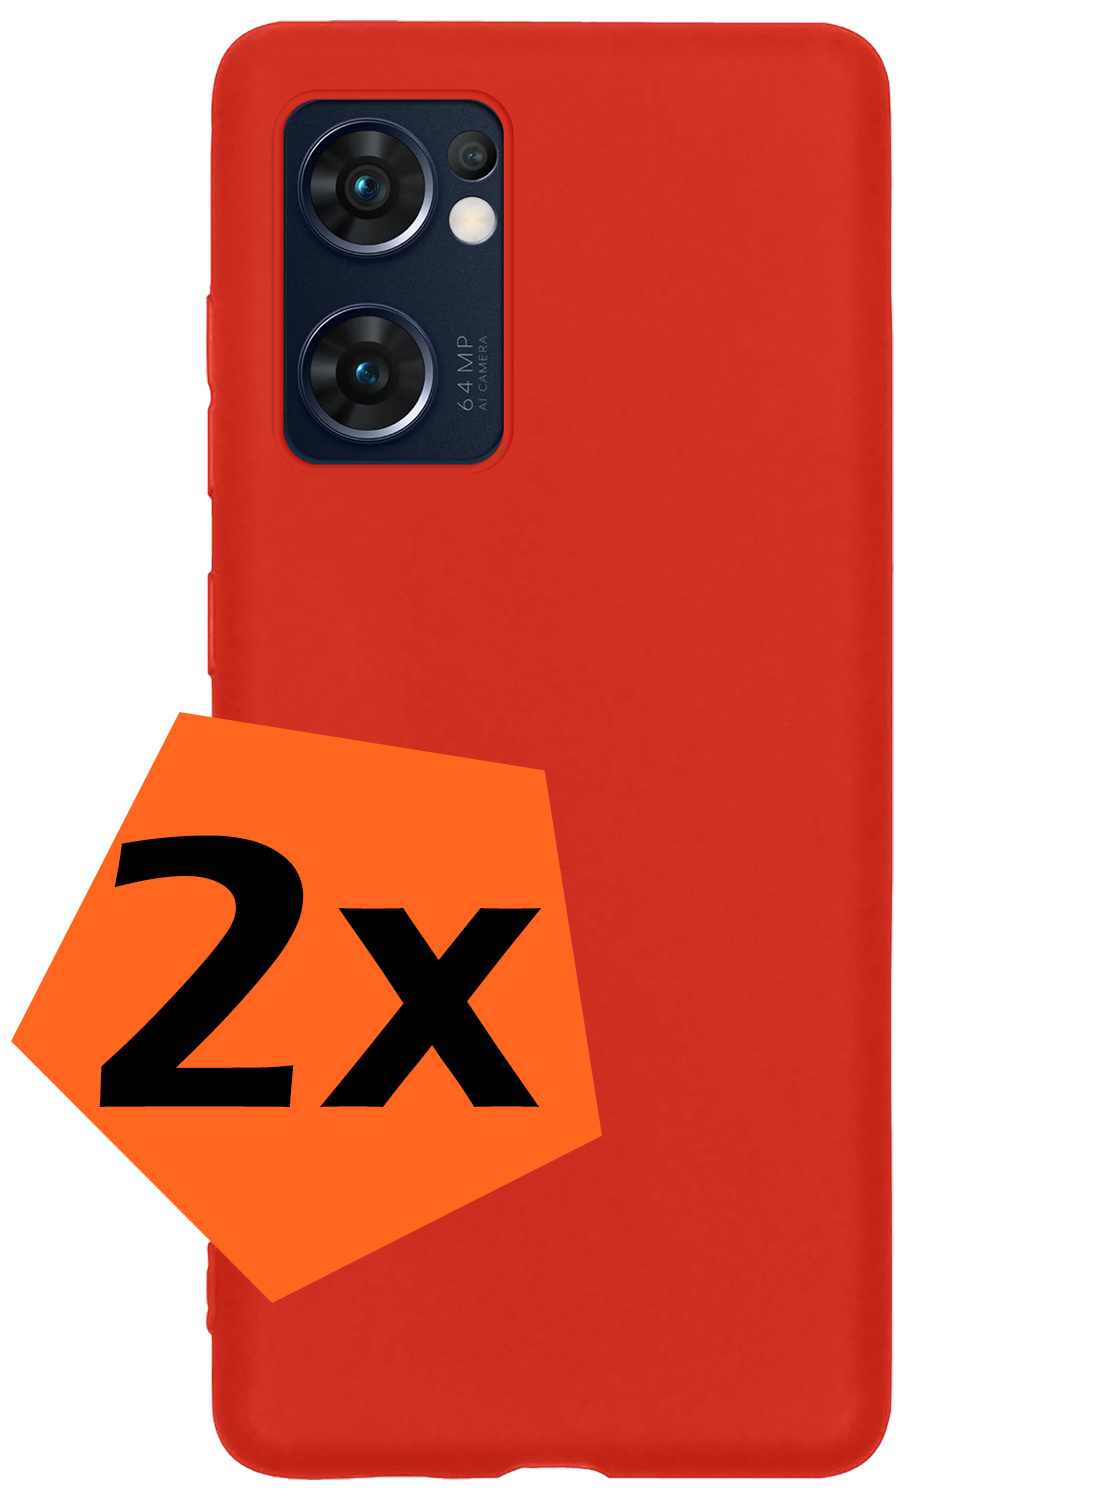 Nomfy Hoesje Geschikt voor OPPO Find X5 Lite Hoesje Siliconen Cover Case - Hoes Geschikt voor OPPO X5 Lite Hoes Back Case - 2-PACK - Transparant